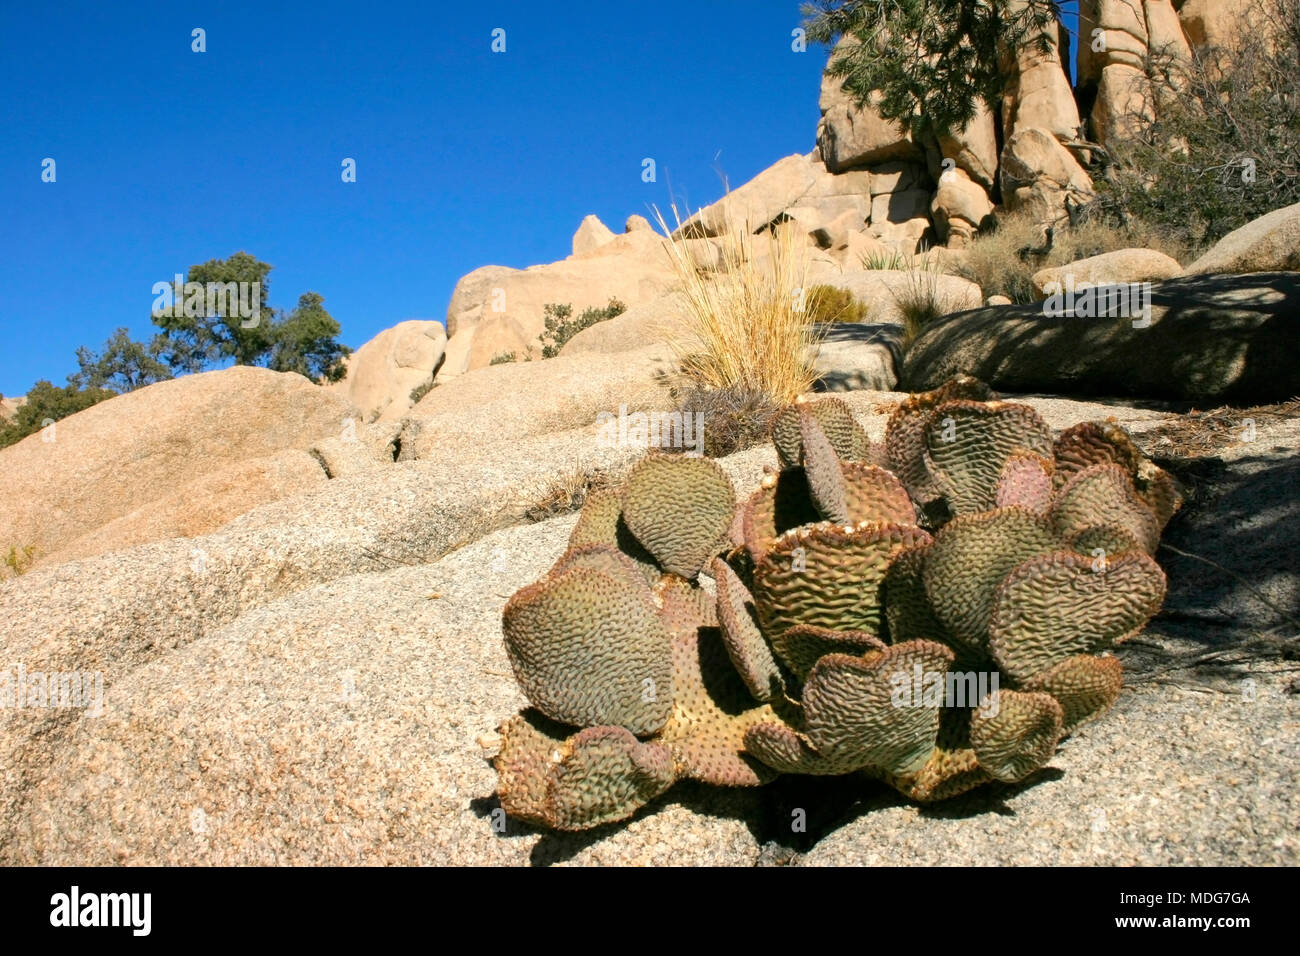 Rock Climb Hidden Valley Big Rocks Prickly Pear Cactus Mojave Desert Joshua Tree National Park, California Stock Photo